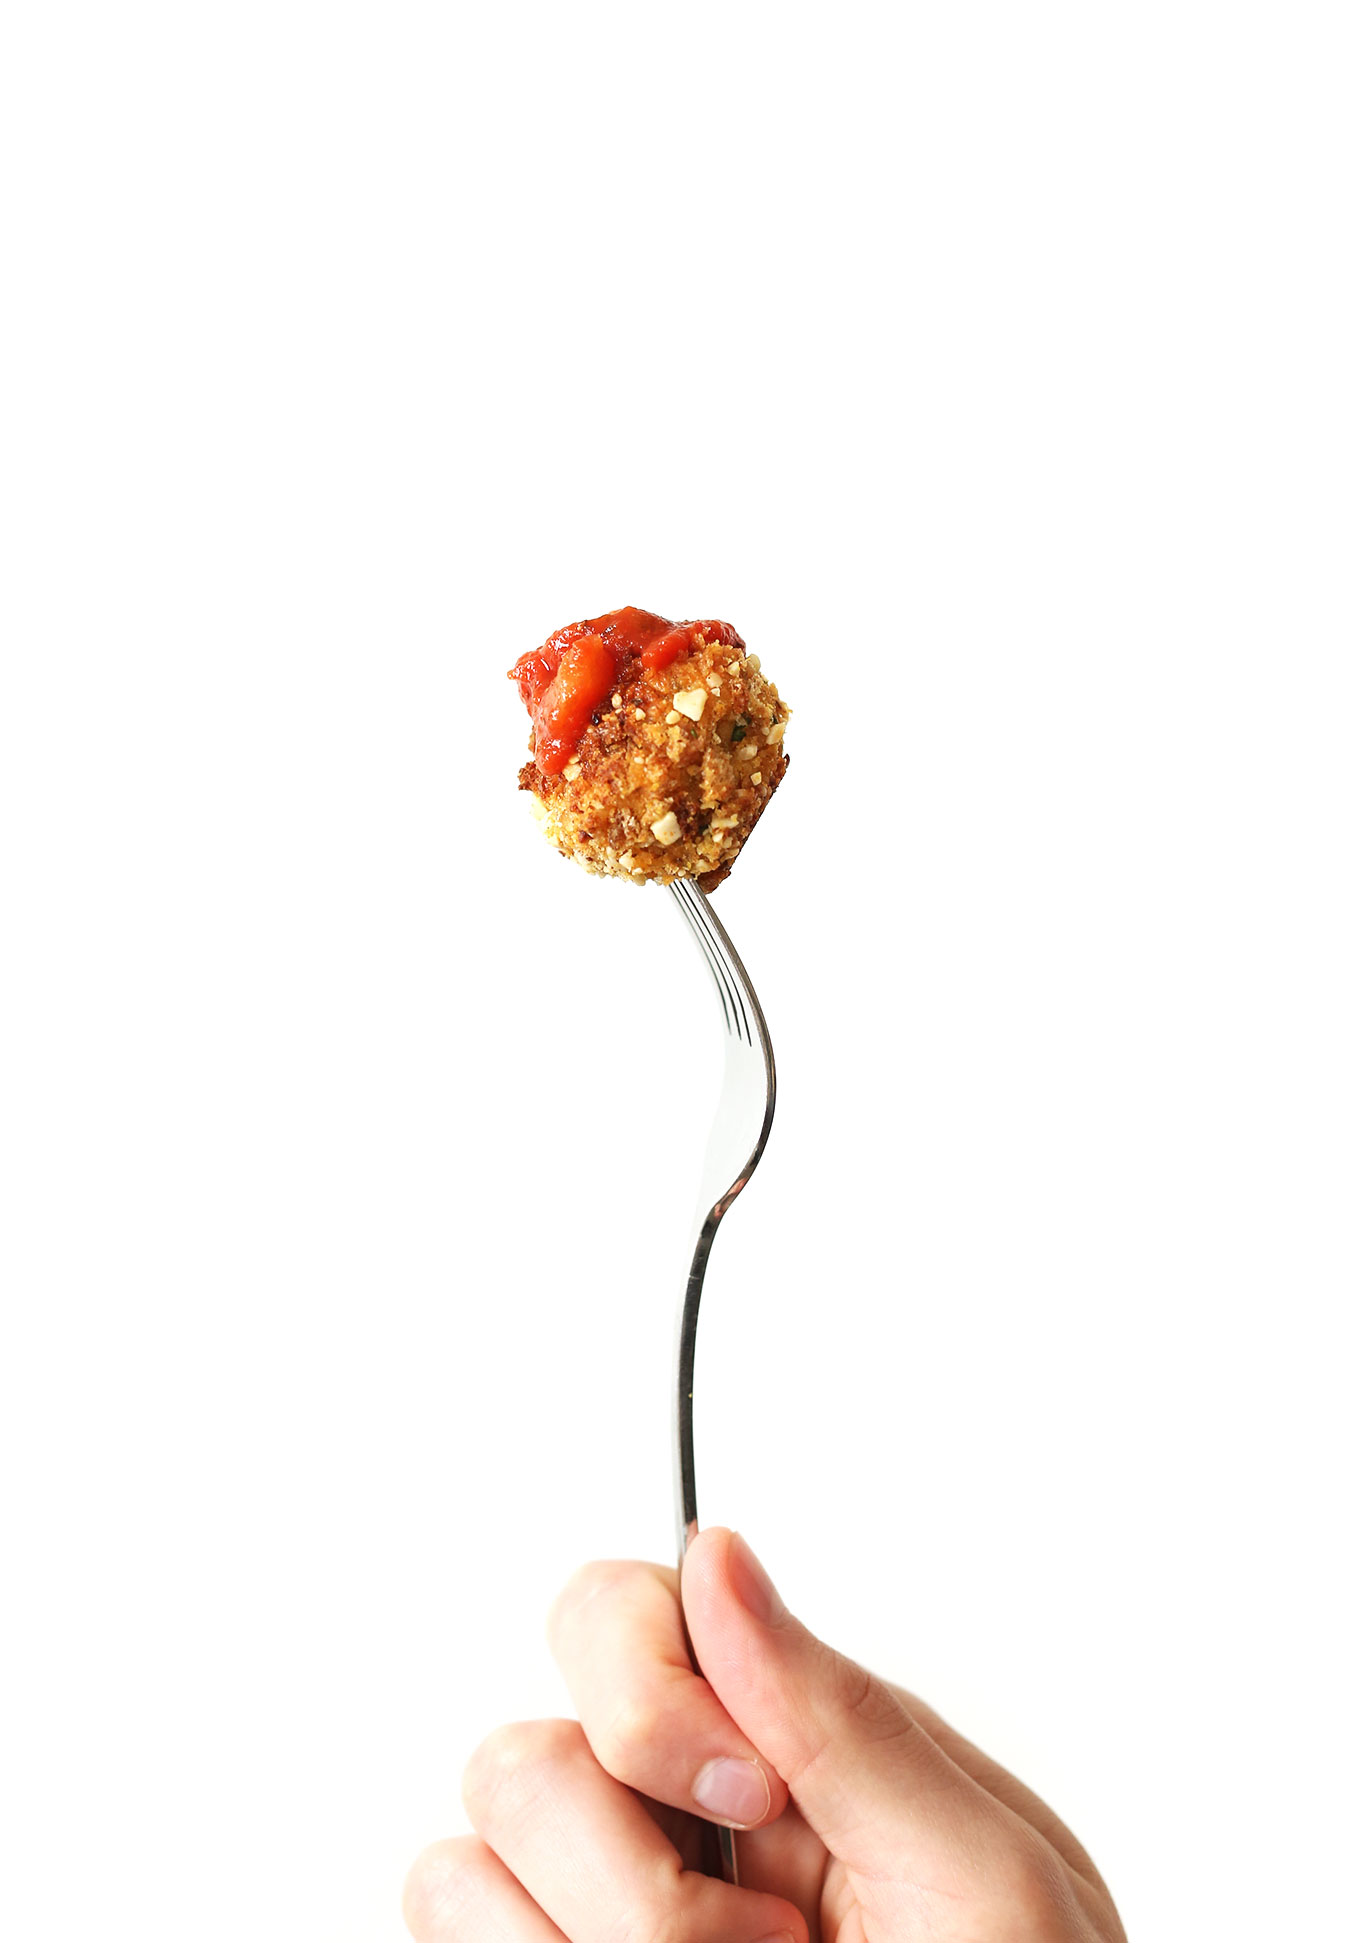 Holding up a marinara-dipped vegan meatball on a fork